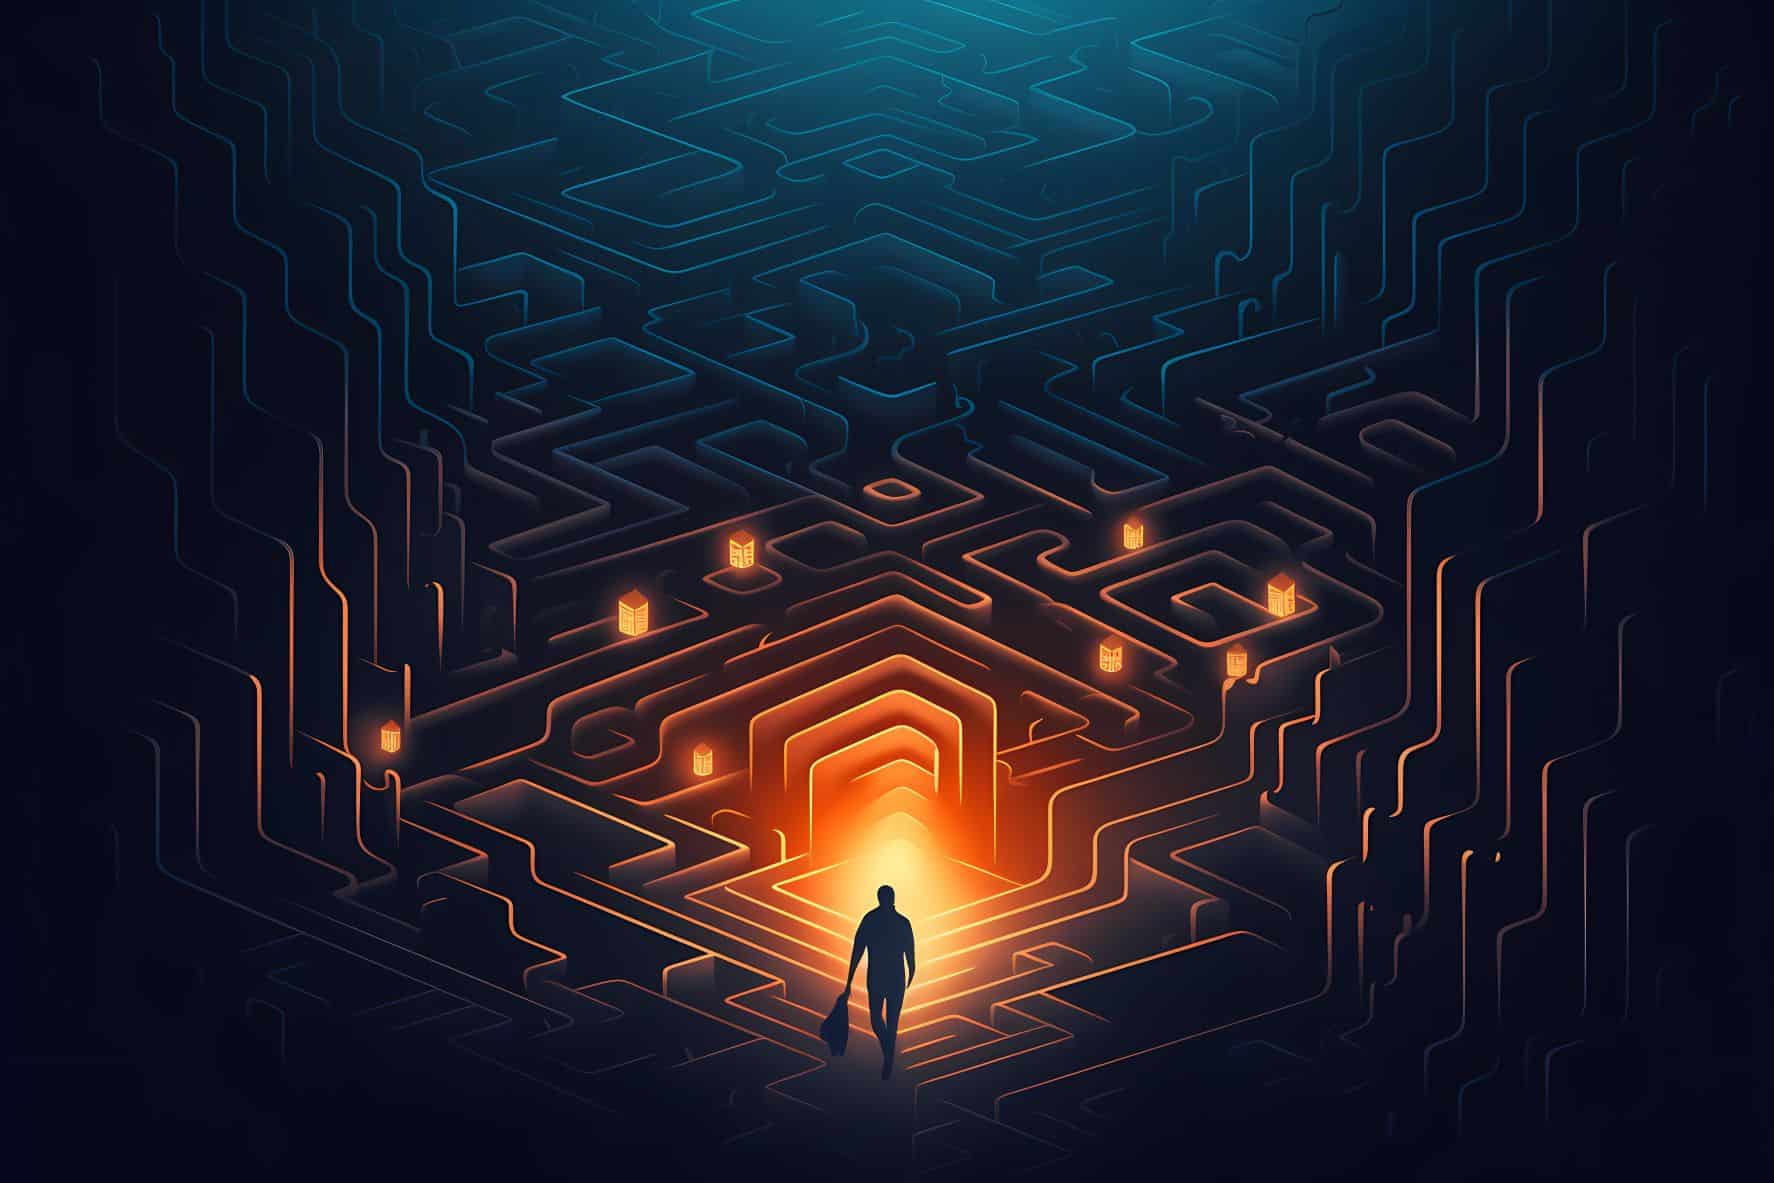 Enter the Mind Maze